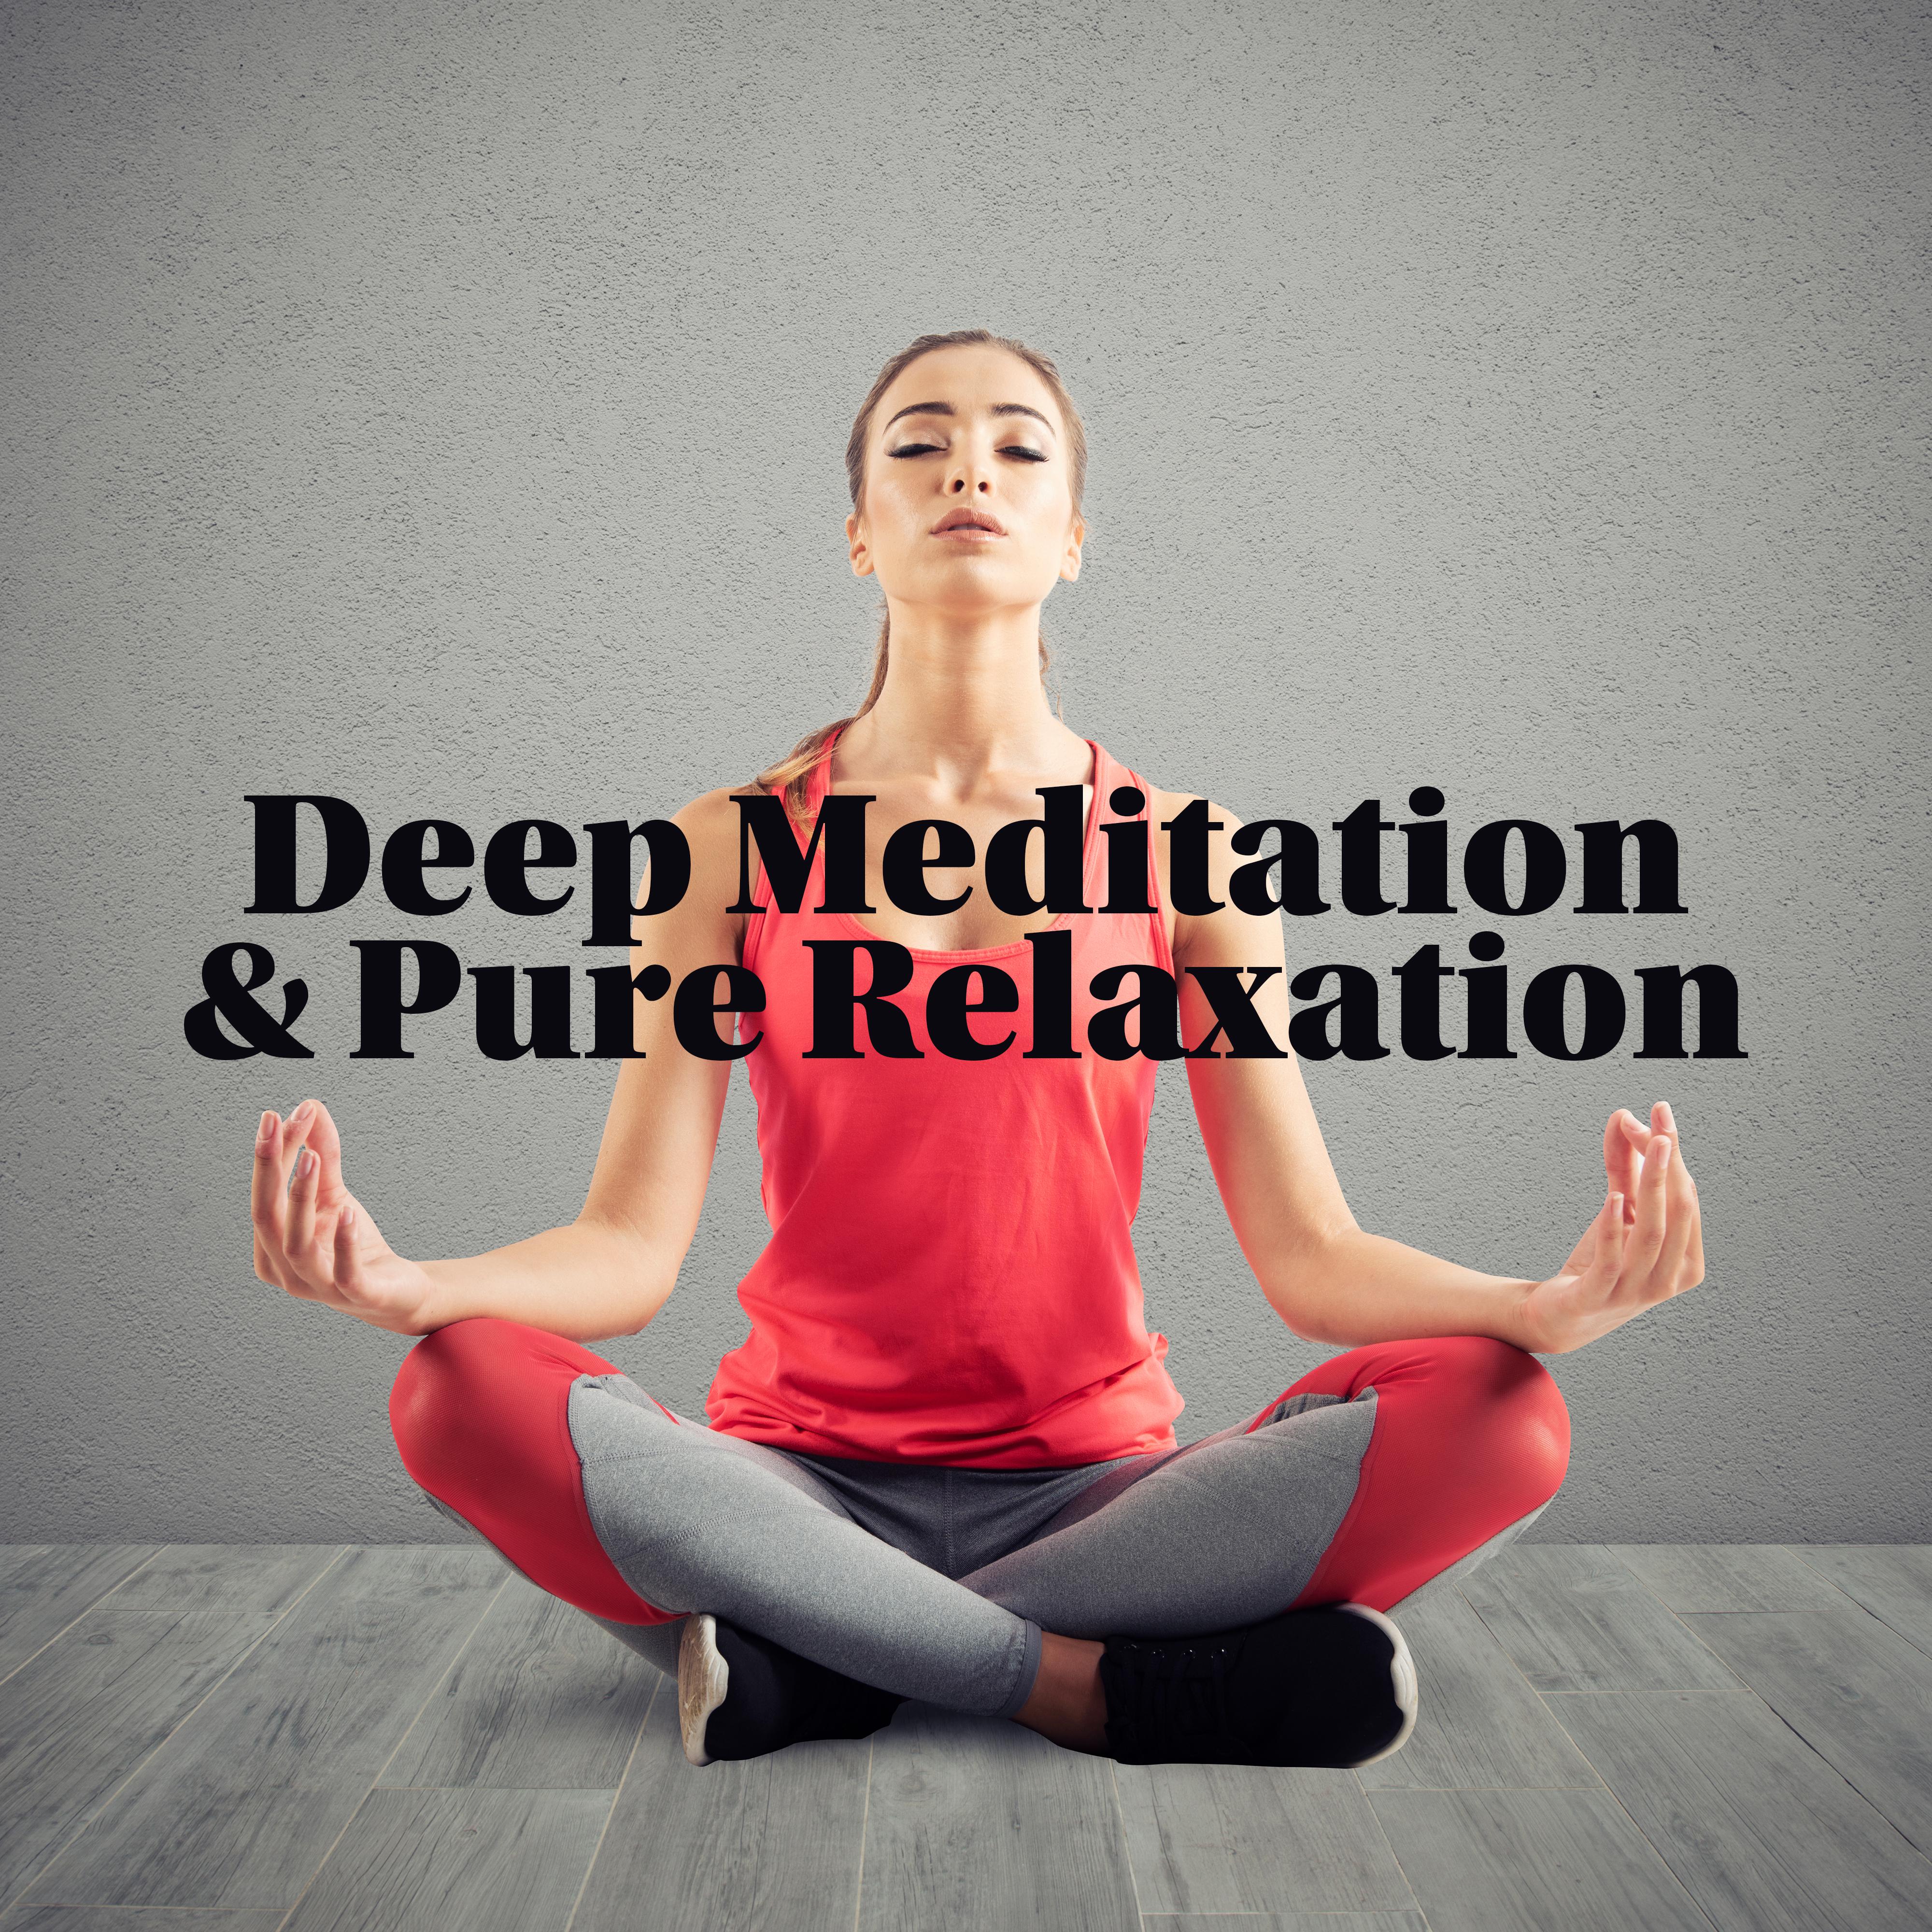 Deep Meditation & Pure Relaxation: Healing Music for Yoga Training, Meditation, Zen Serenity, Spiritual Songs for Meditation, Sleep, Rest, Spiritual Awakening